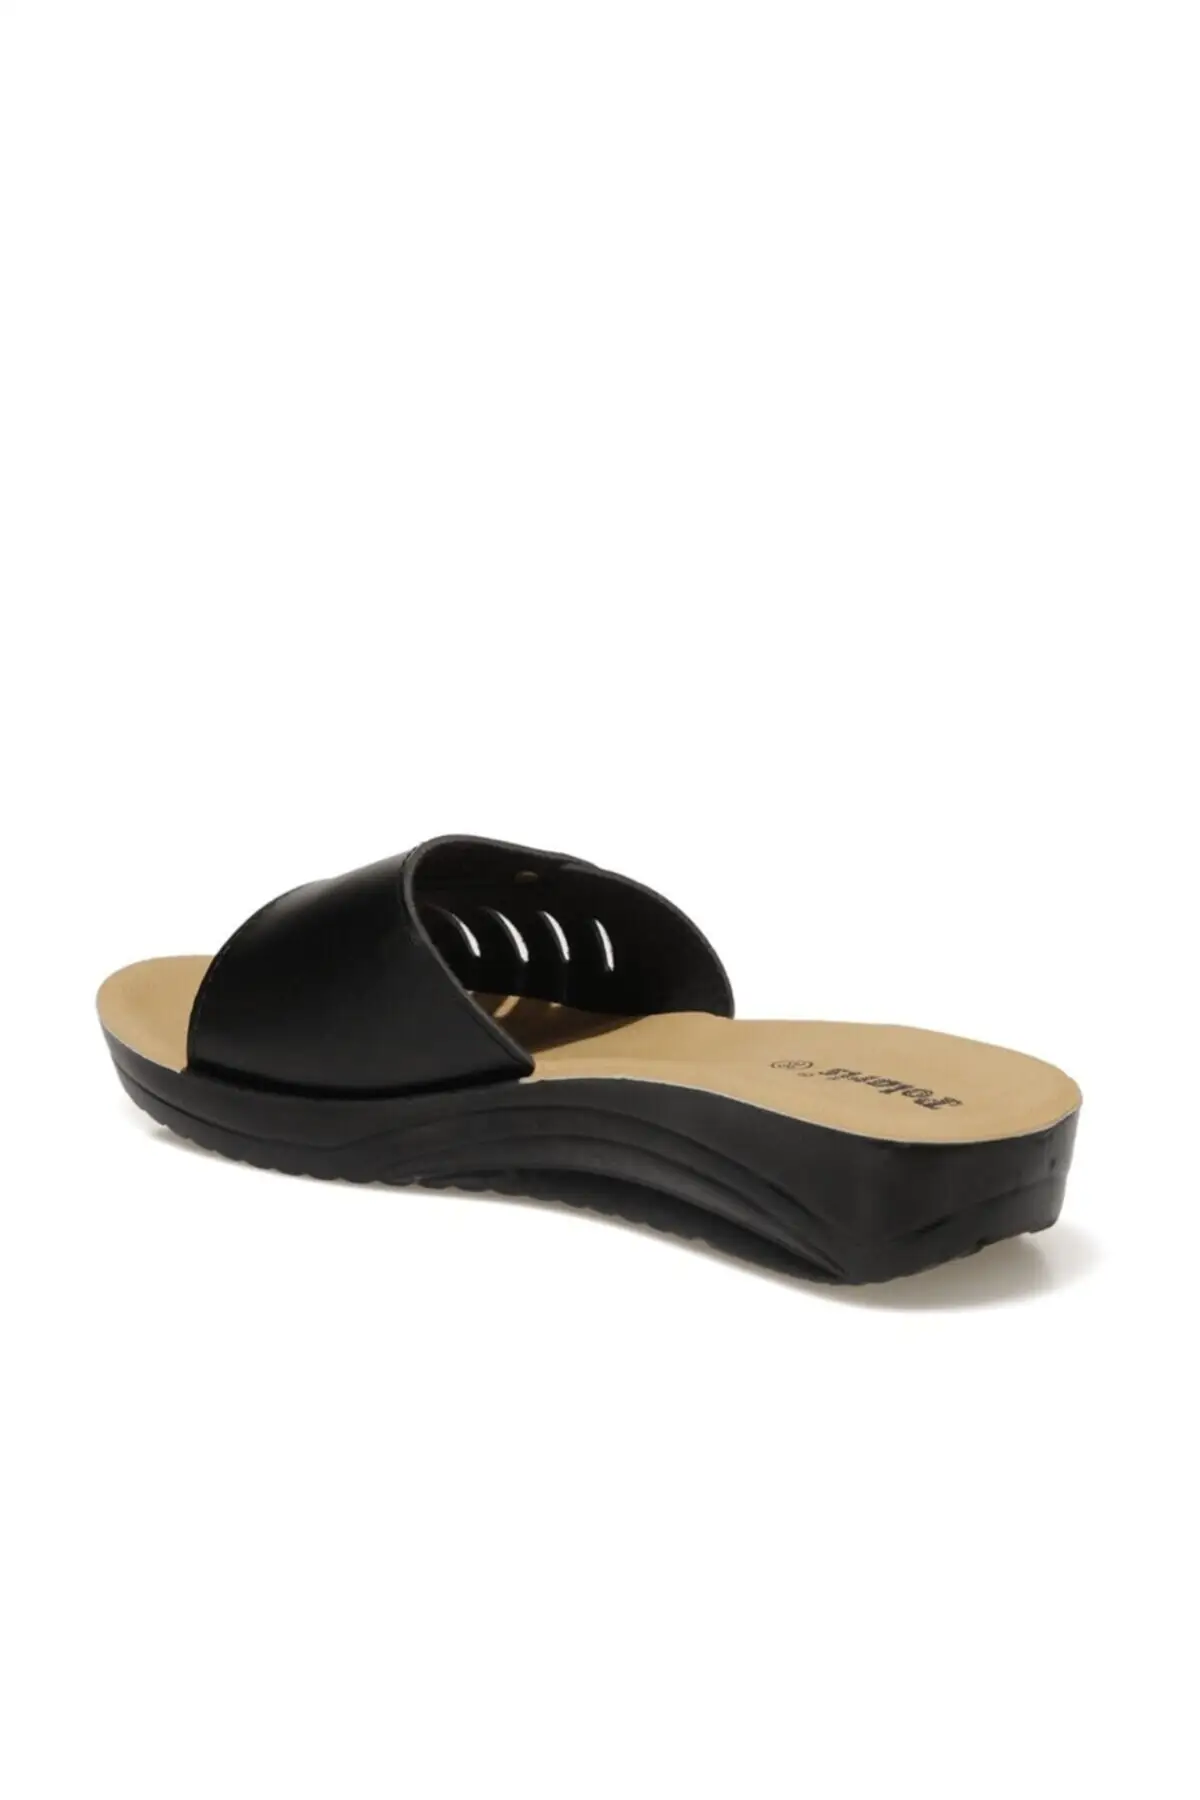 

Women Sandals. Zfx black home Fashion Summer Slipper Indoor Outdoor Flip Flops Beach Shoes Female Slippers Platform Casual